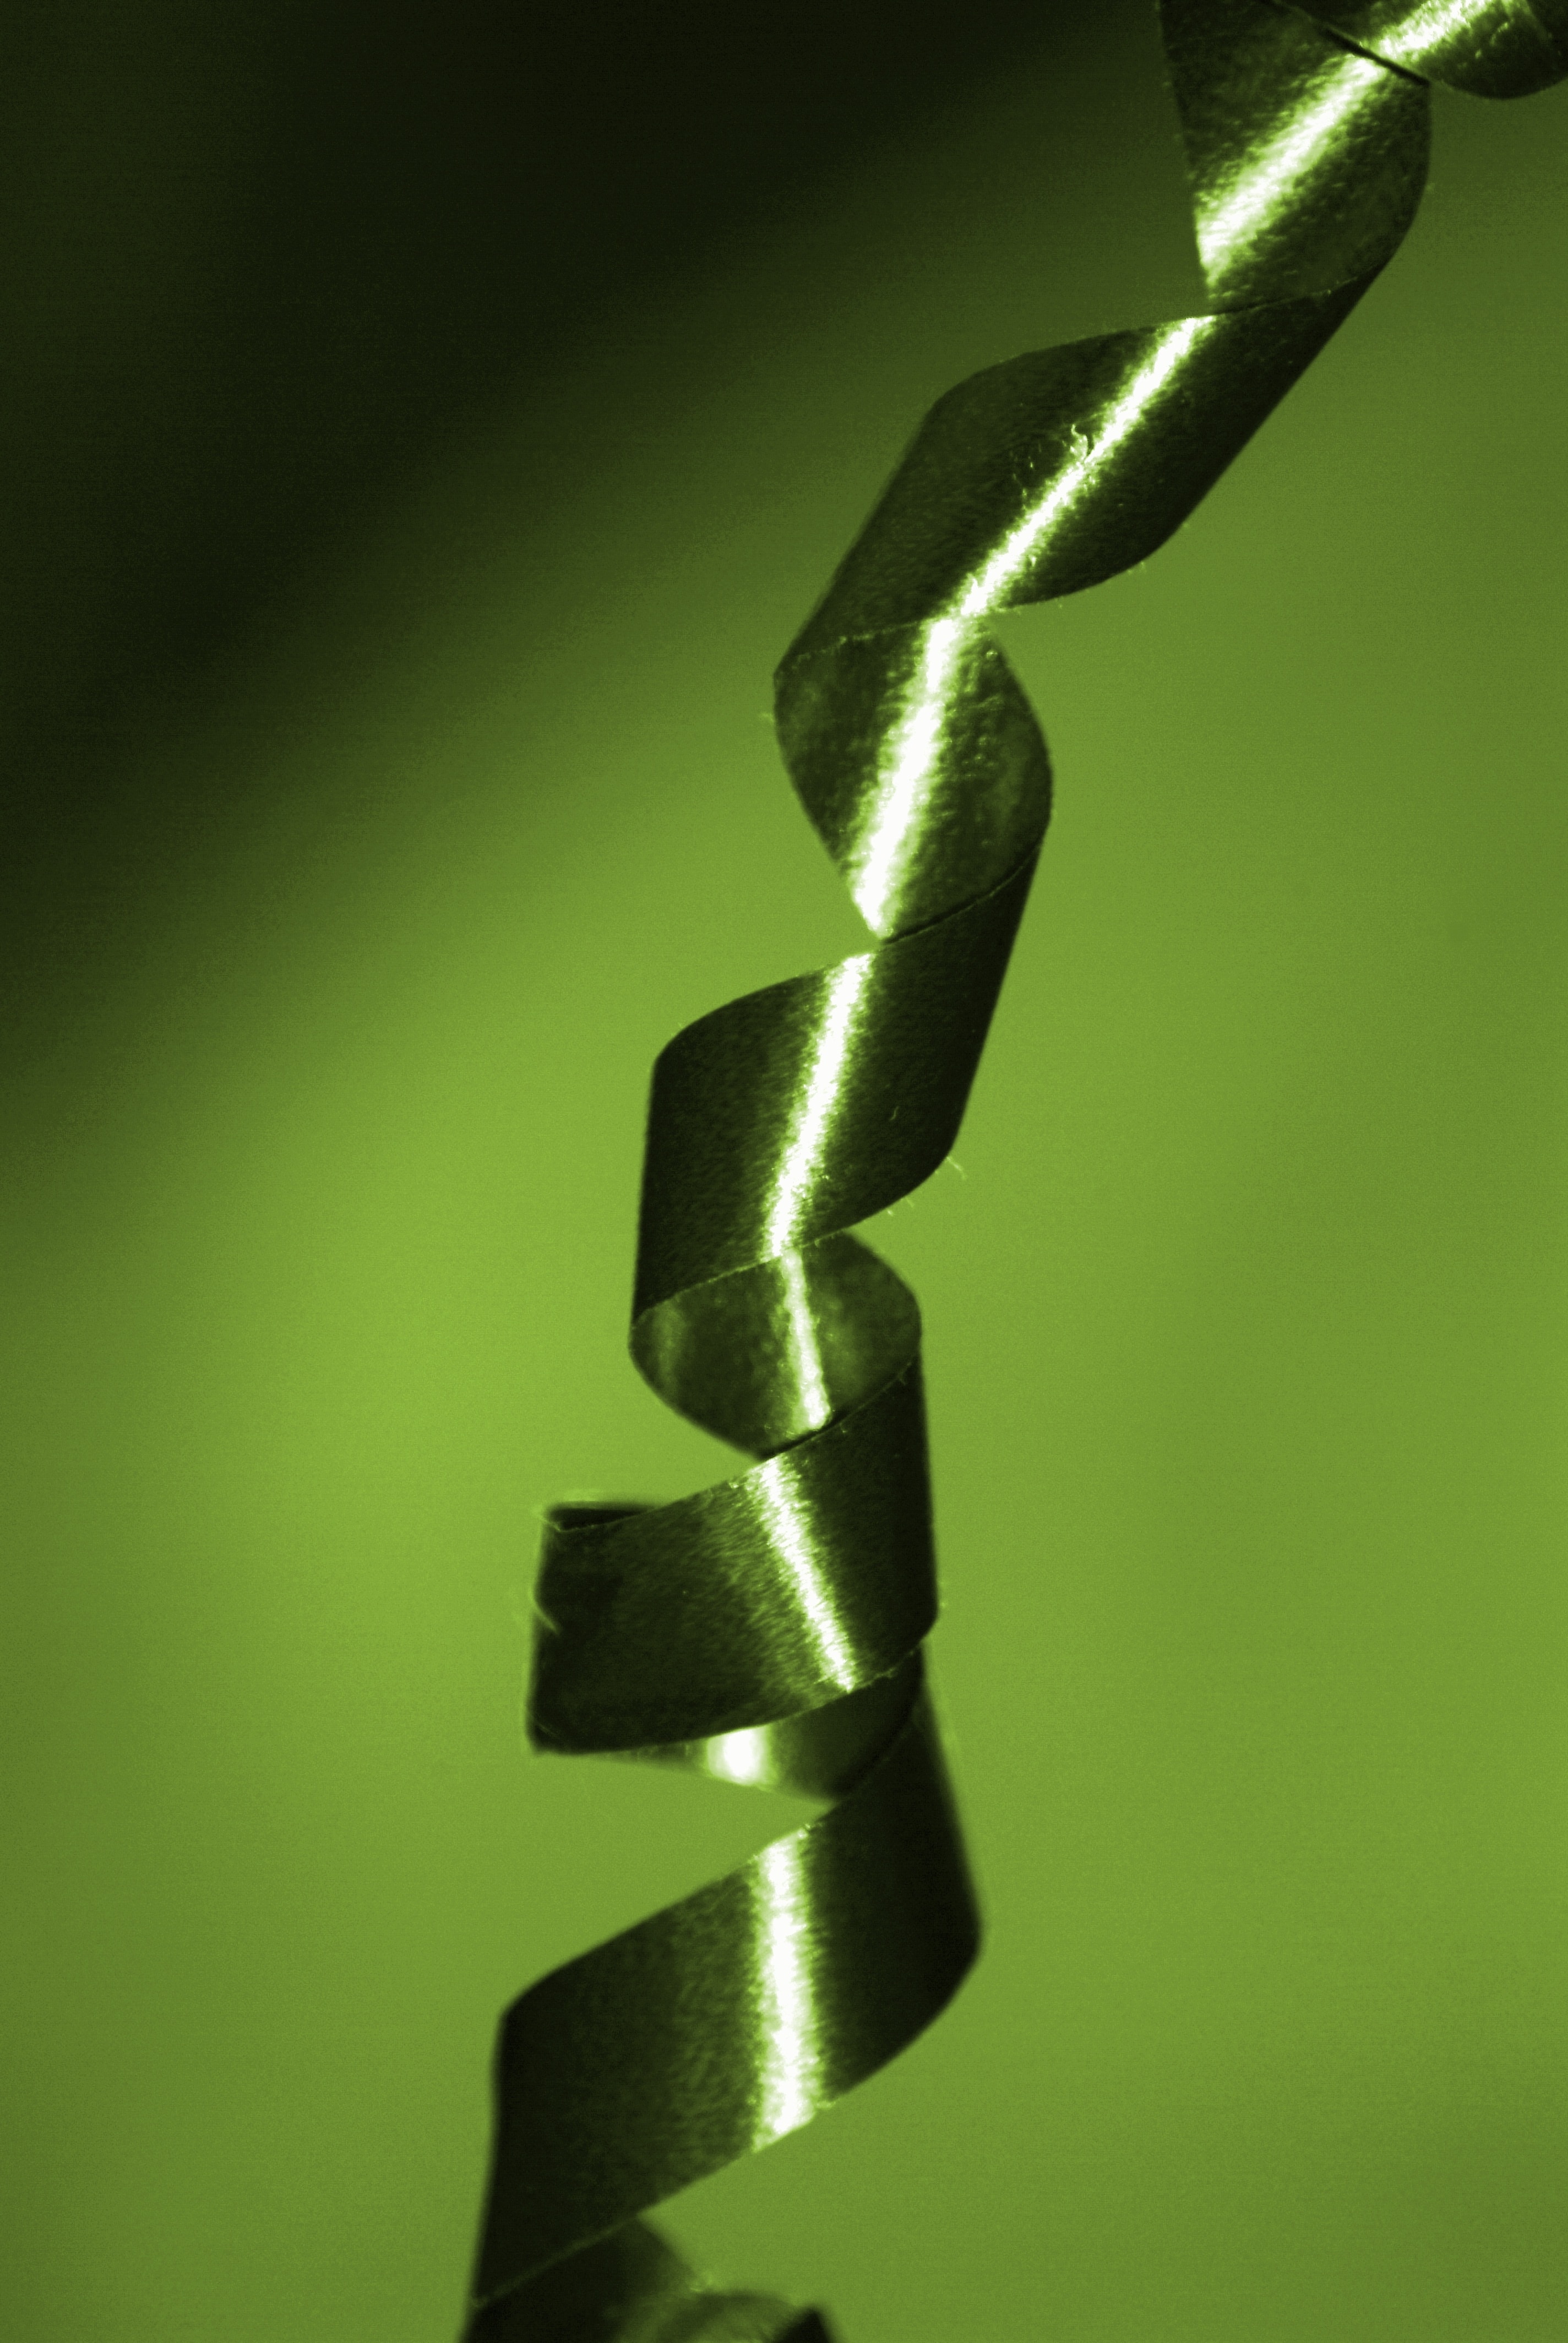 green ribbon